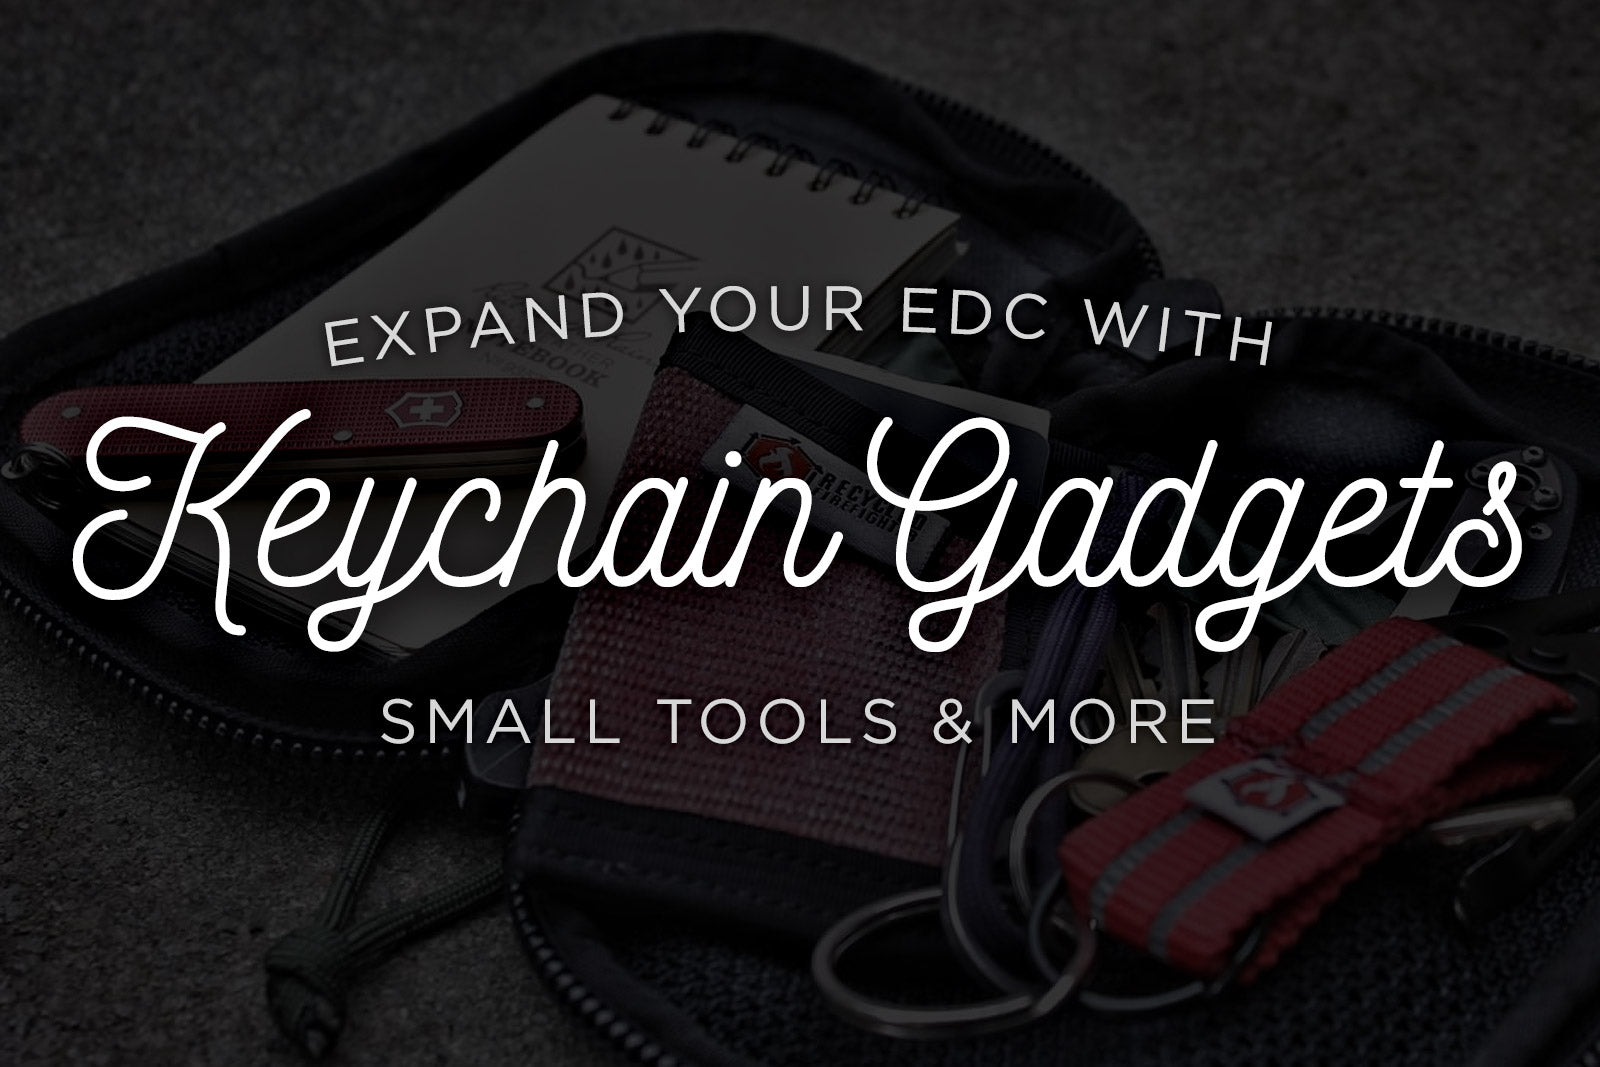 Top EDC Keychain Gadgets